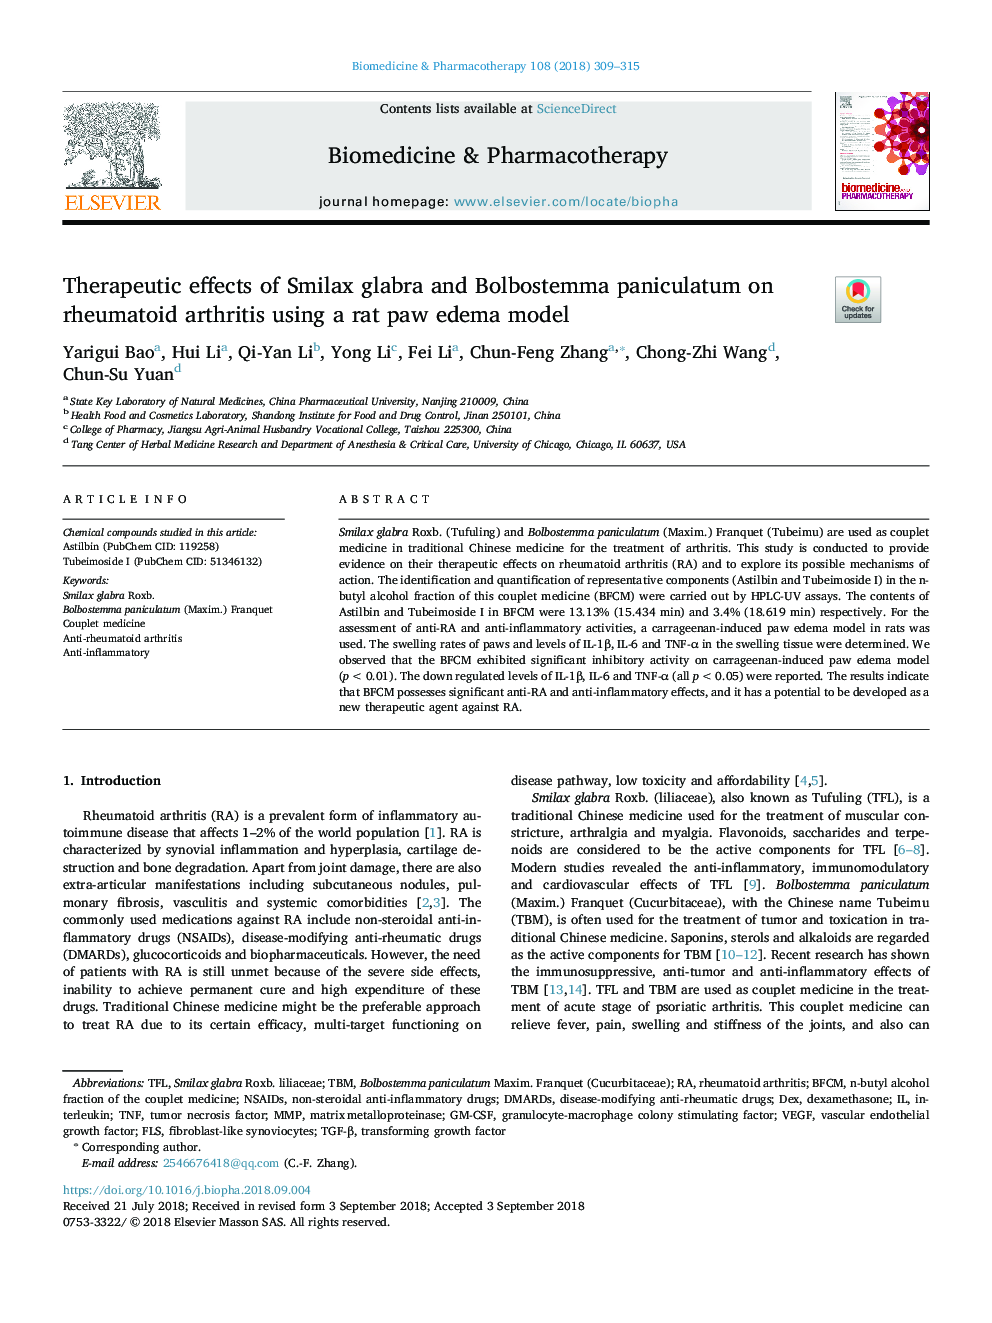 Therapeutic effects of Smilax glabra and Bolbostemma paniculatum on rheumatoid arthritis using a rat paw edema model